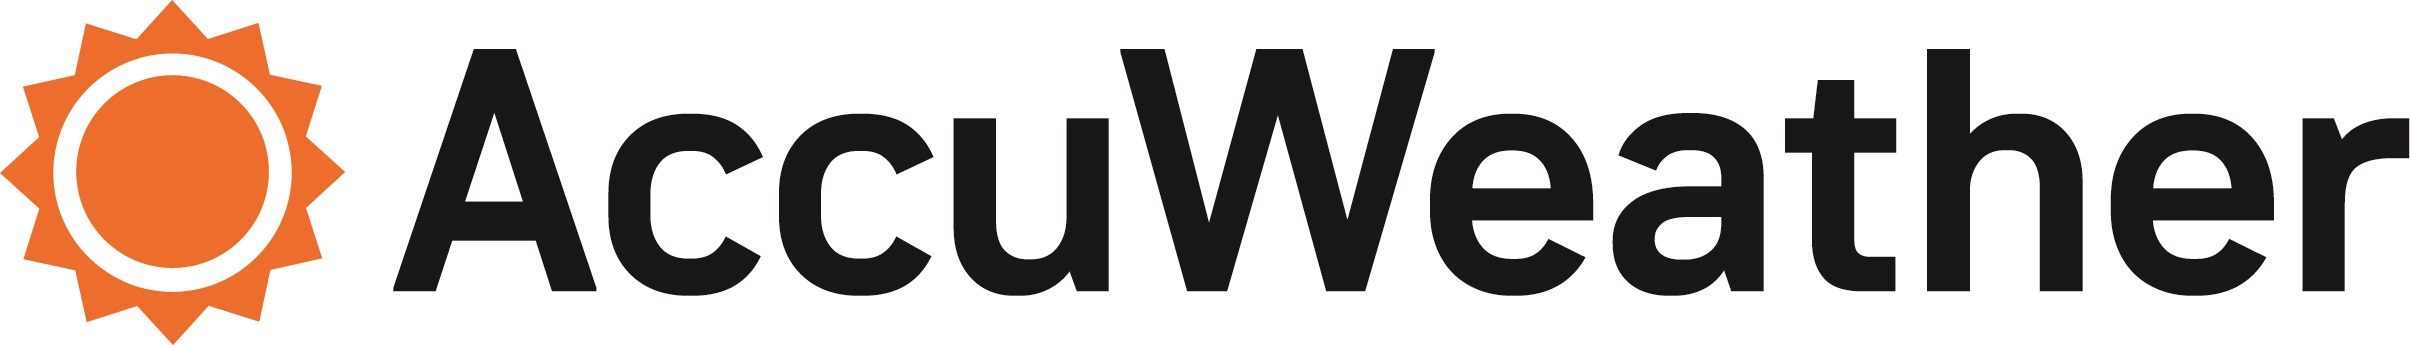 AccuWeather Logo NEW.jpeg